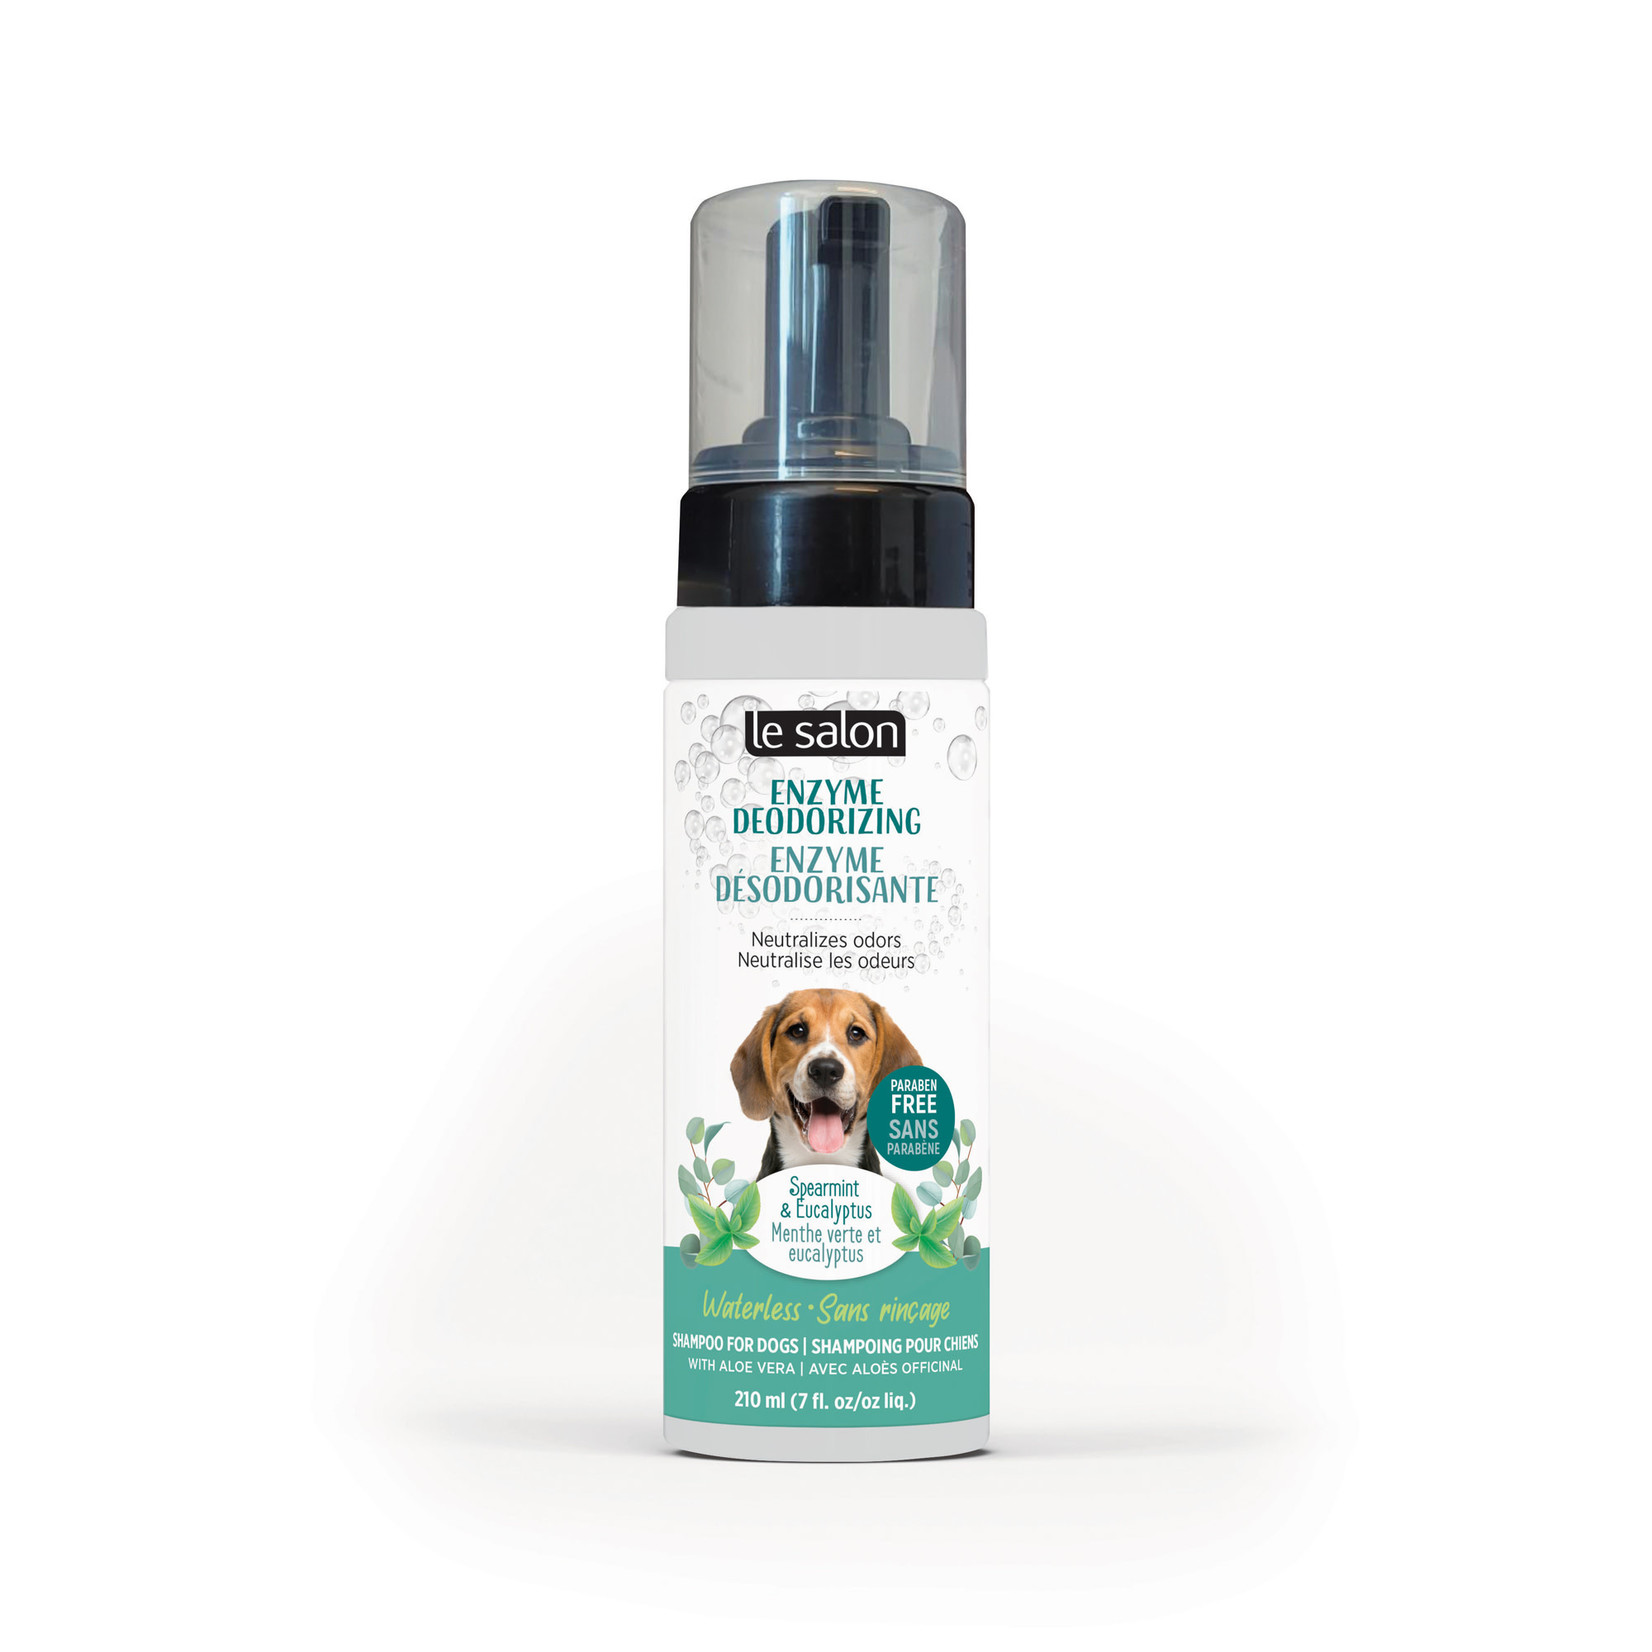 LE SALON Le Salon Enzyme Deodorizing Waterless Shampoo for Dogs - 210 ml (7.1 oz)